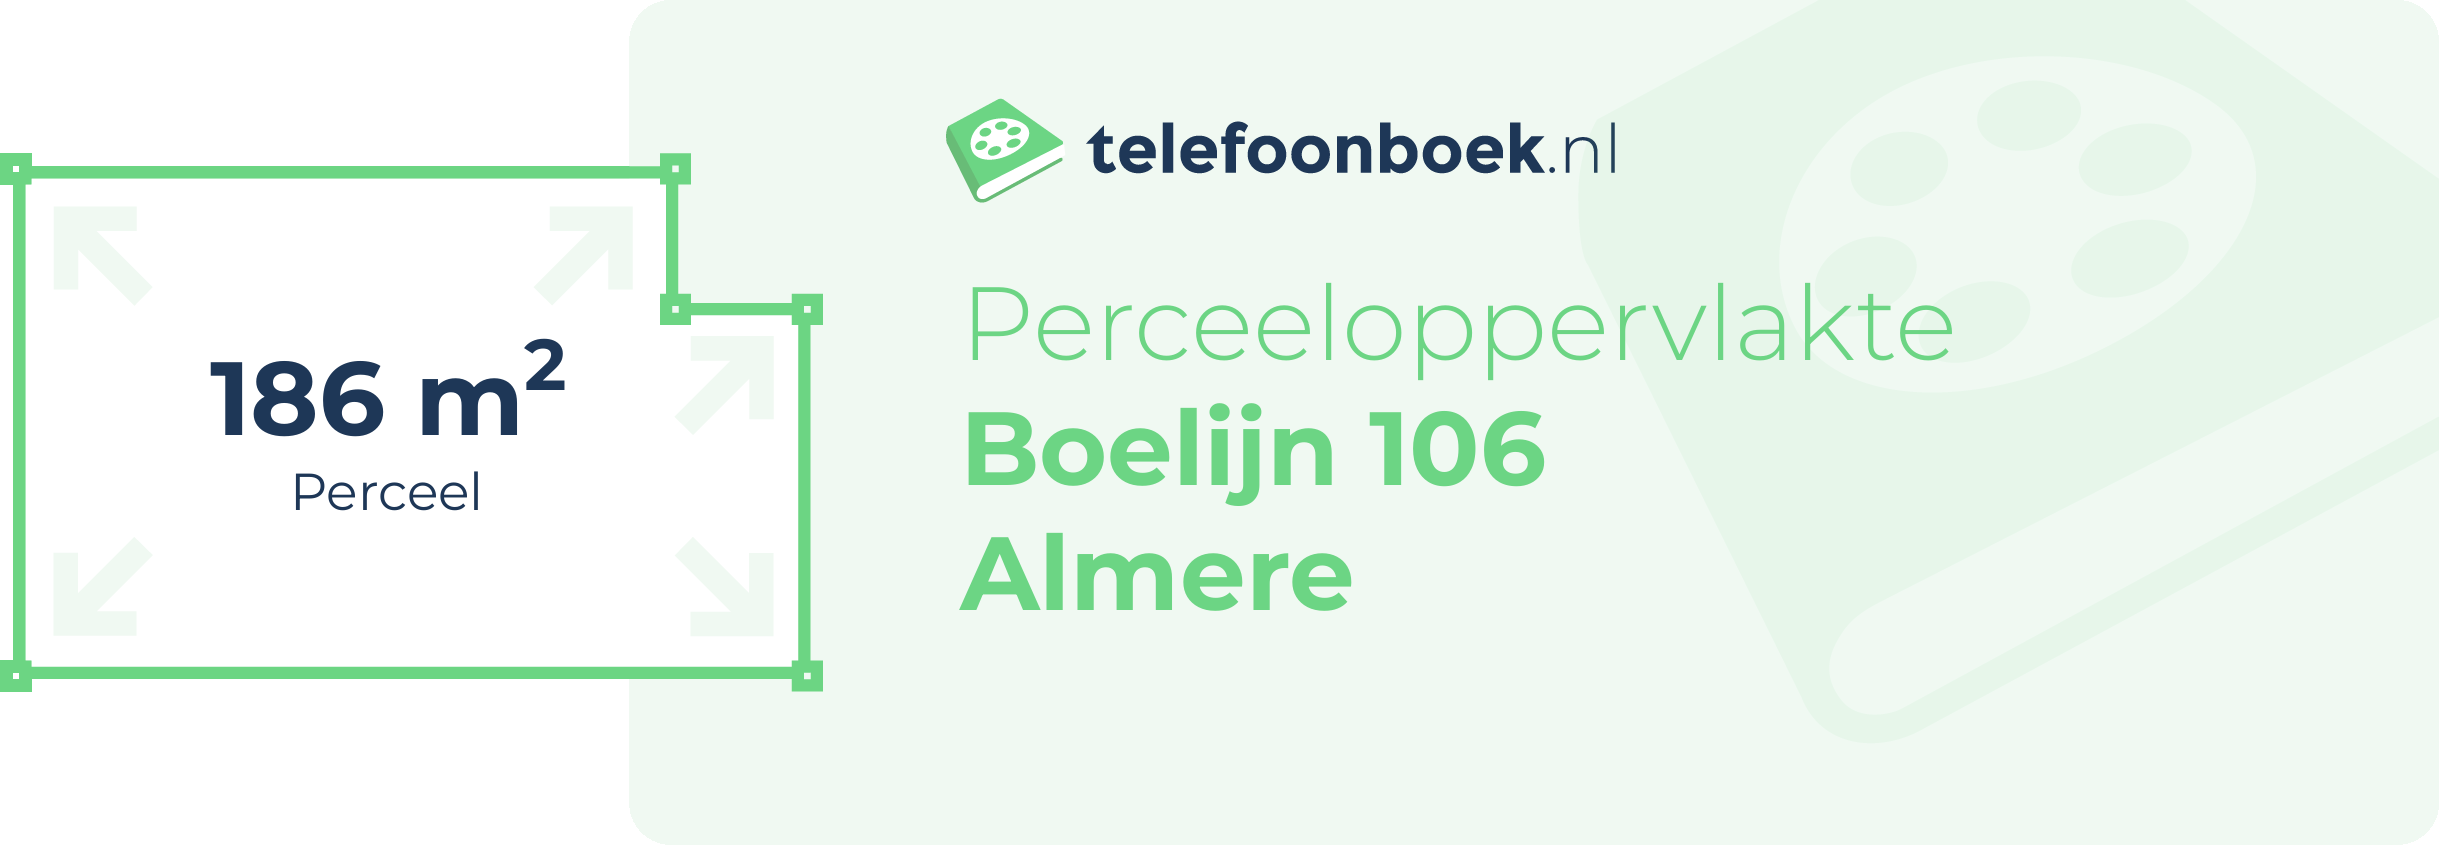 Perceeloppervlakte Boelijn 106 Almere